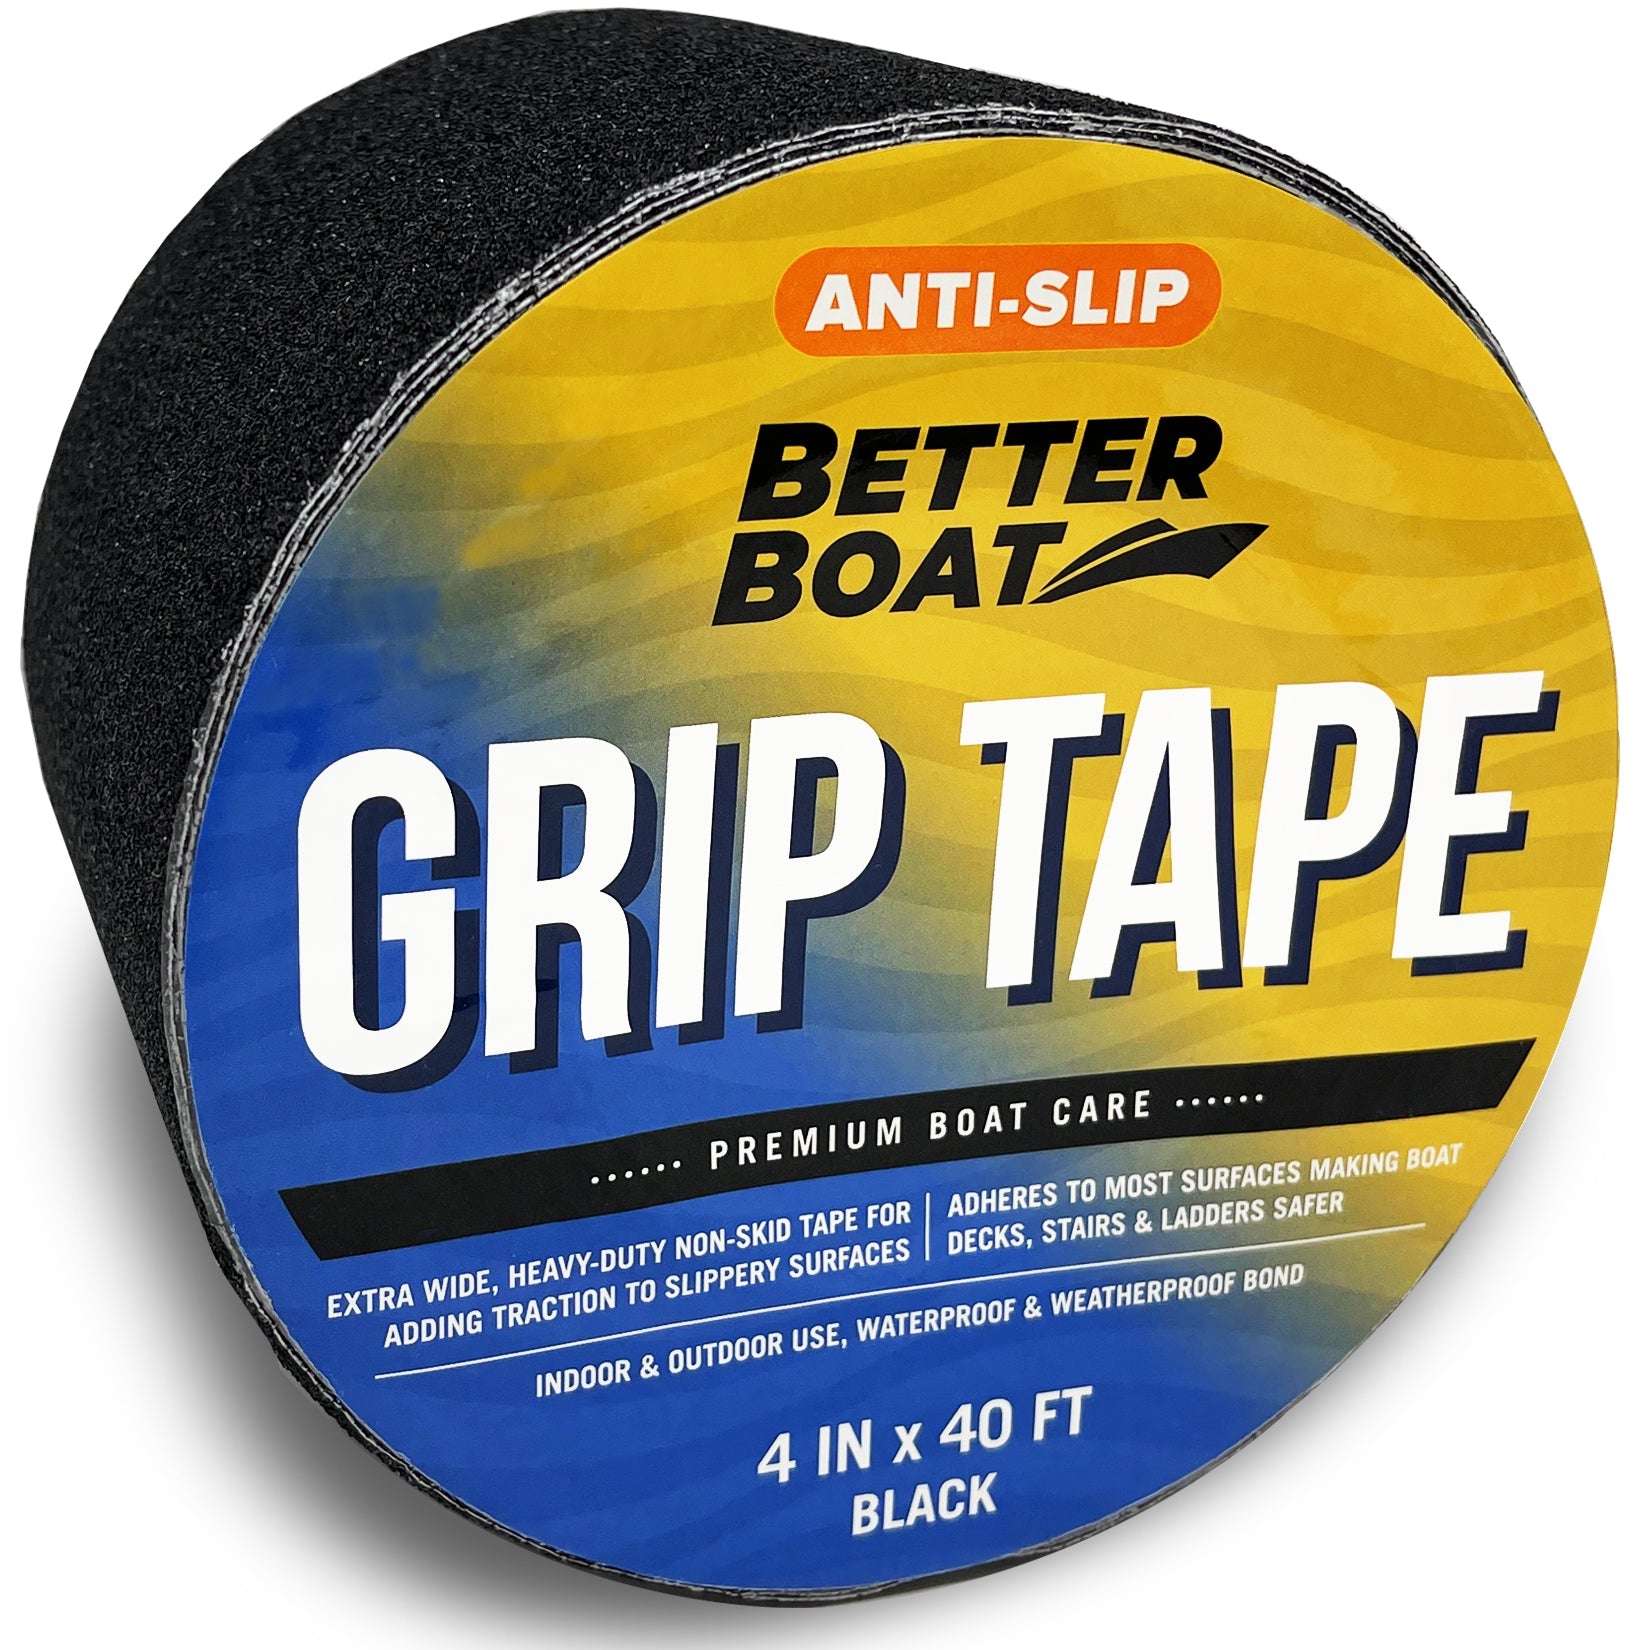 Menda City shabby Encyclopedia No-Slip Grip Tape for Boats | Anti-Slip Safety Tape | Better Boat